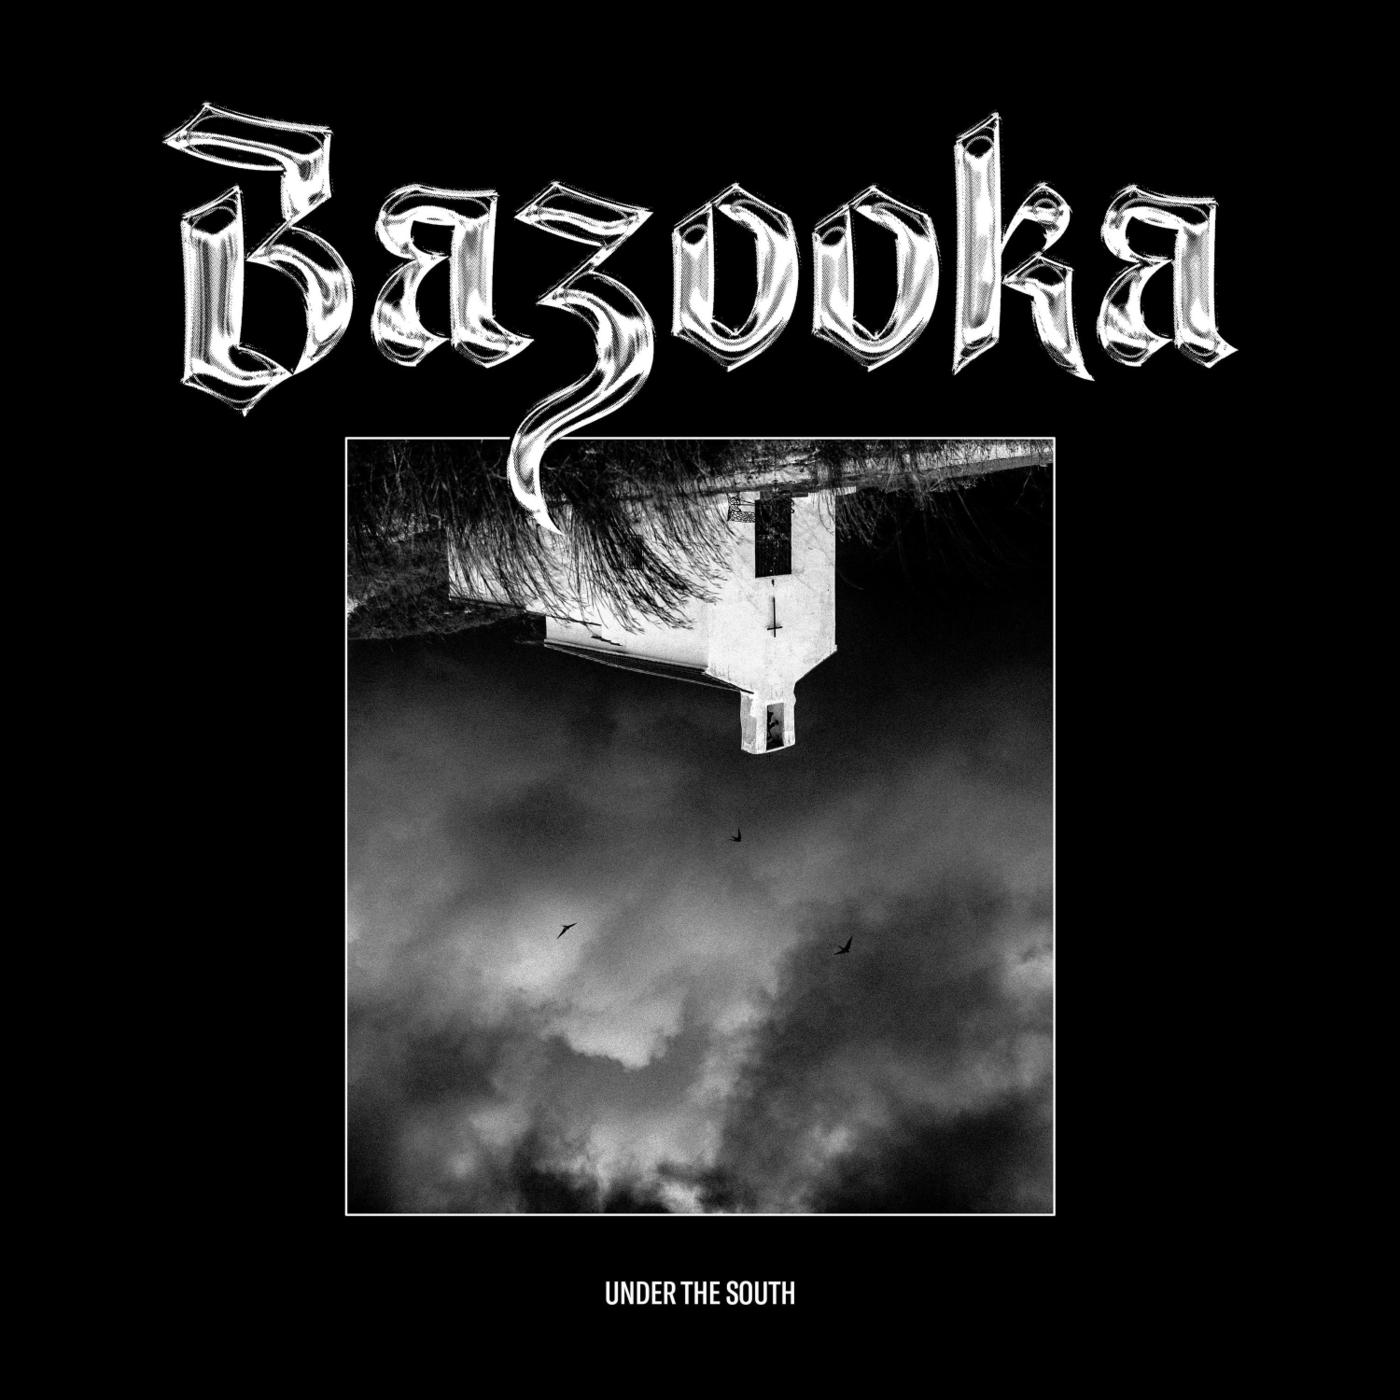 Bazooka - Time of Grace